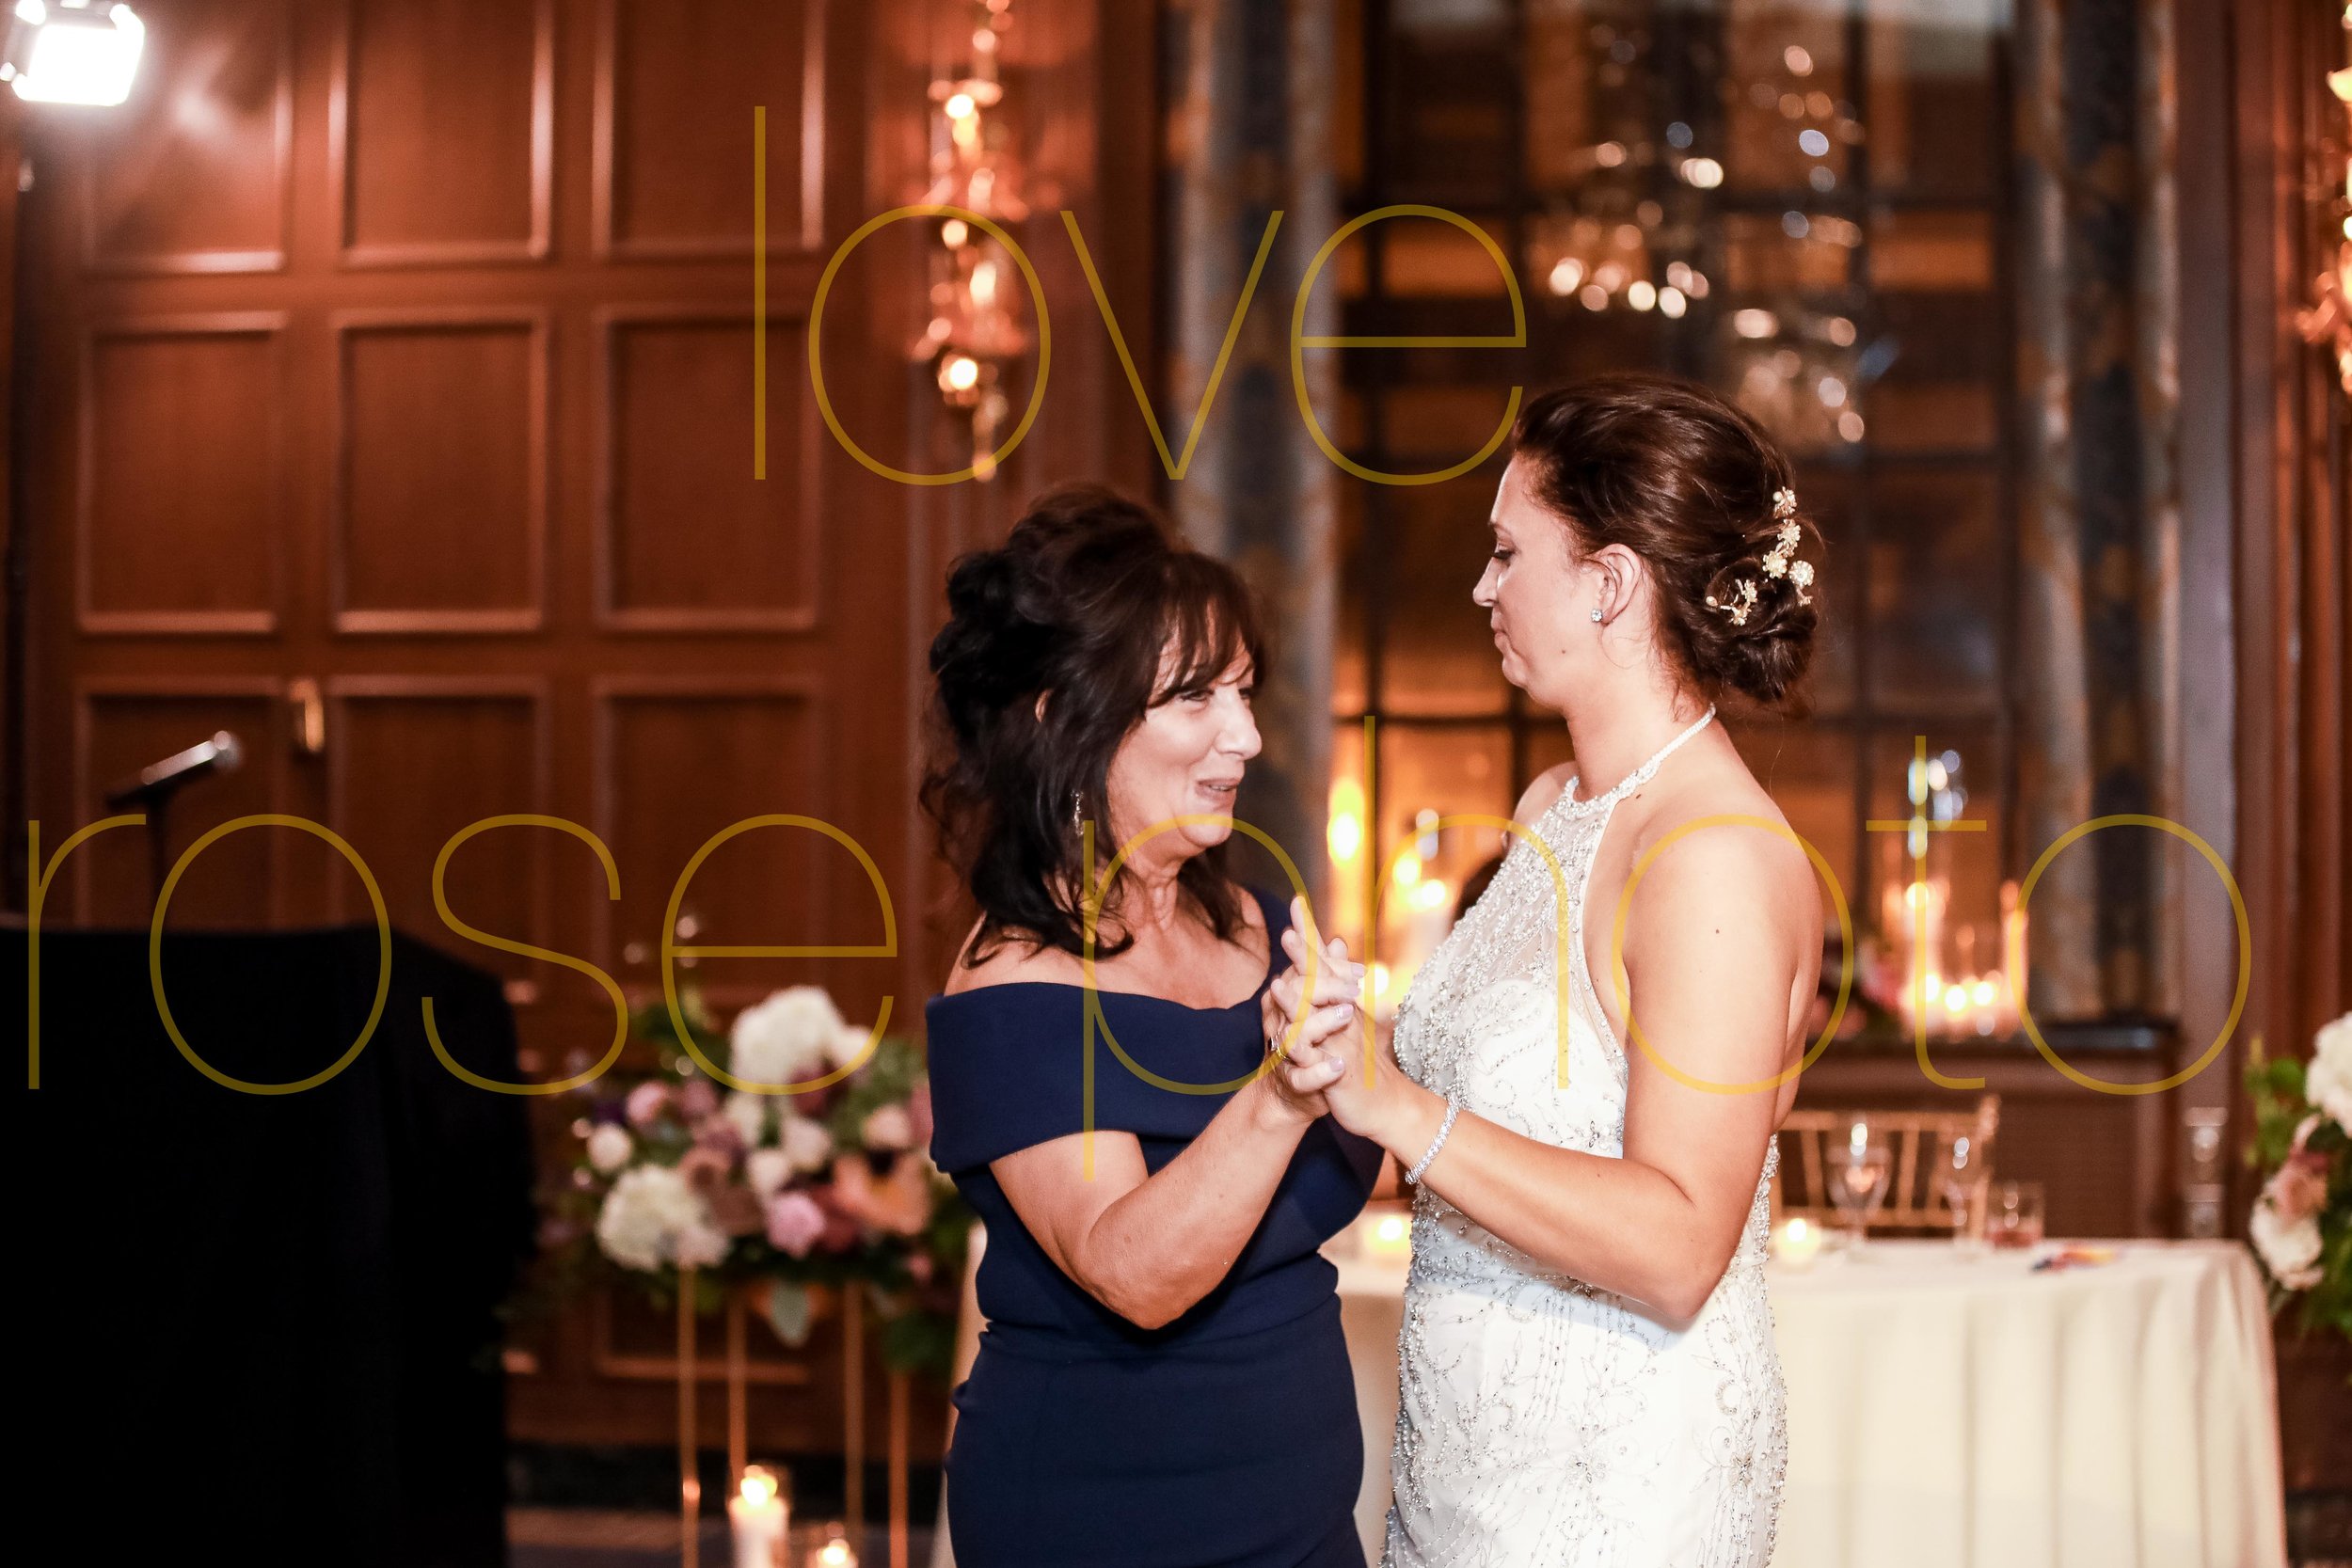 sophie + melissa love rose photo gay wedding chicago pride 2019 -84.jpg